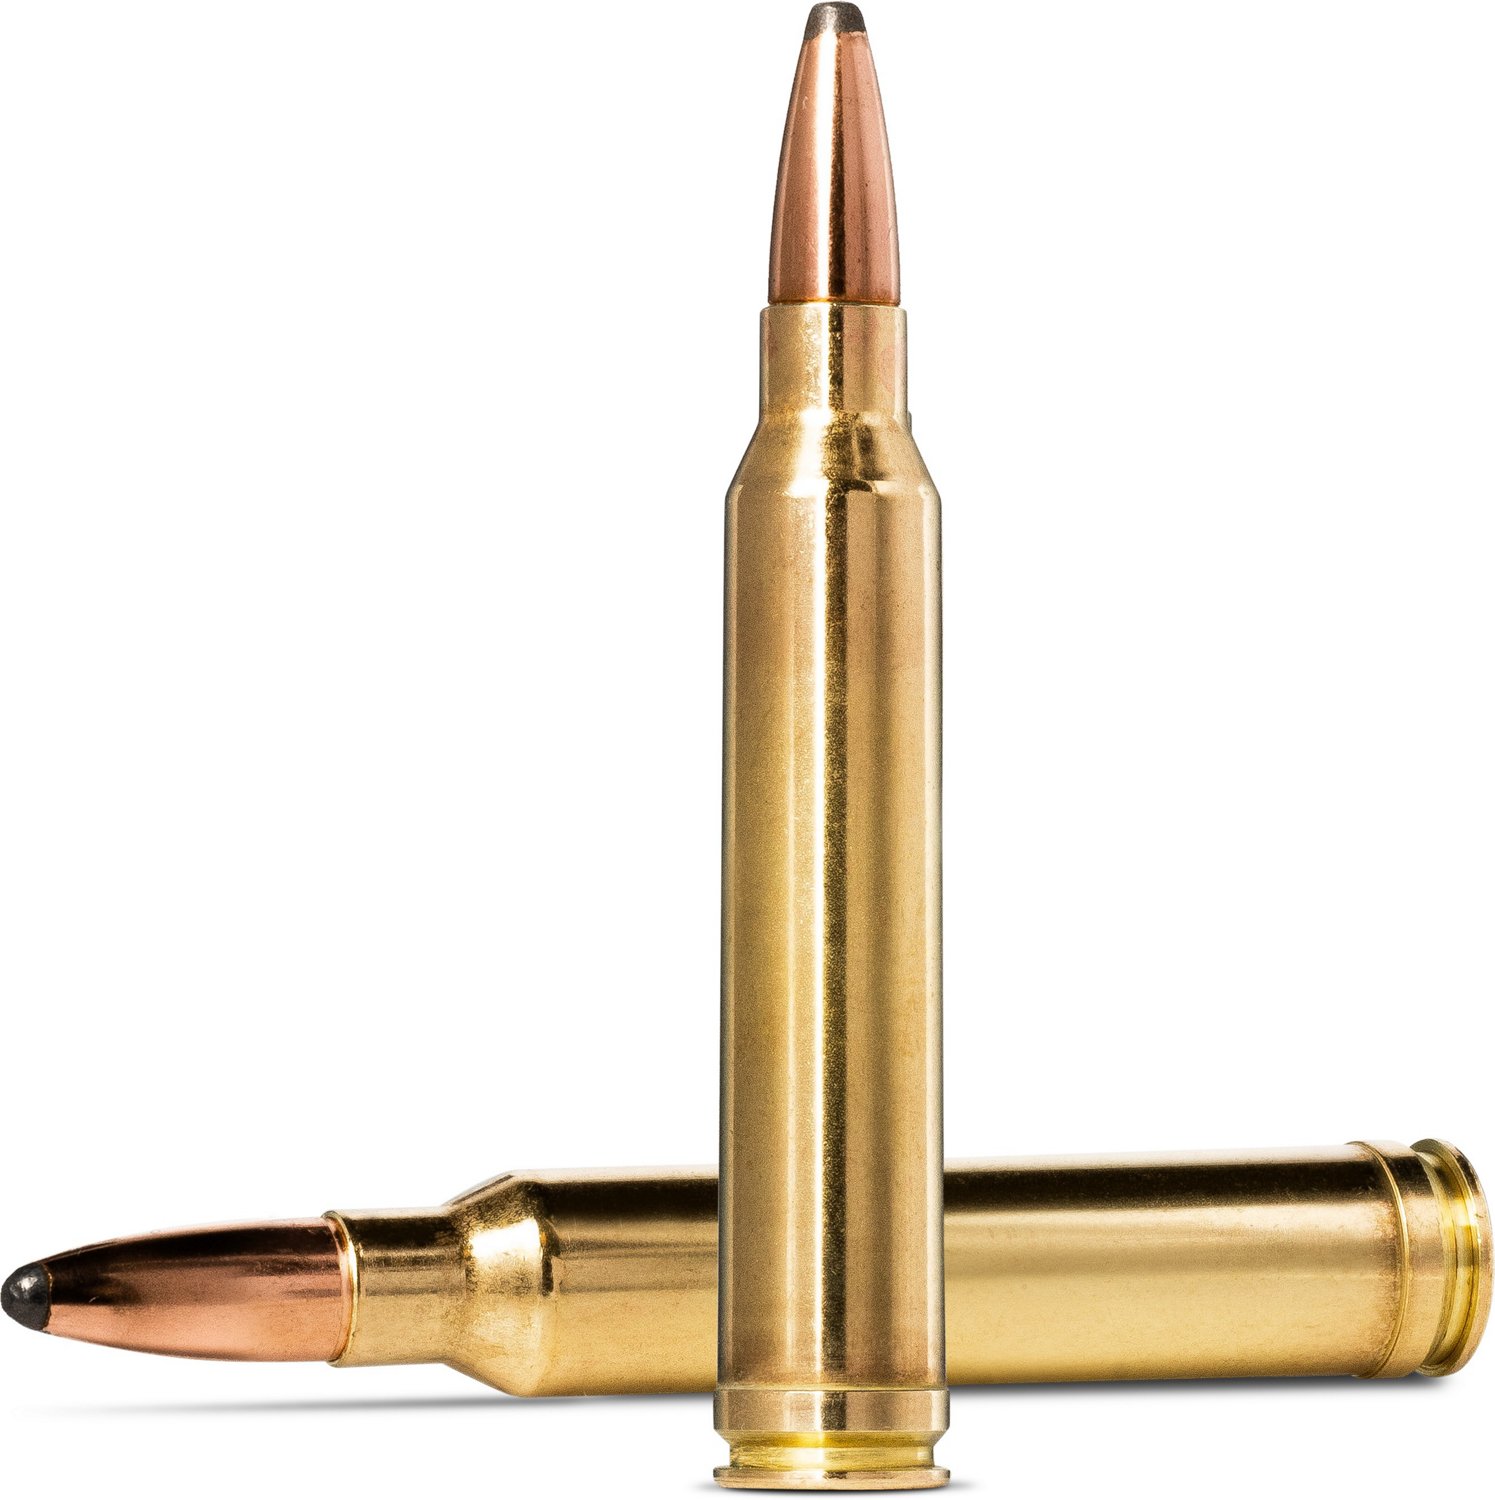 Norma USA Whitetail .300 Winchester Magnum 150-Grain Centerfire Rifle Ammunition - 20 Rounds